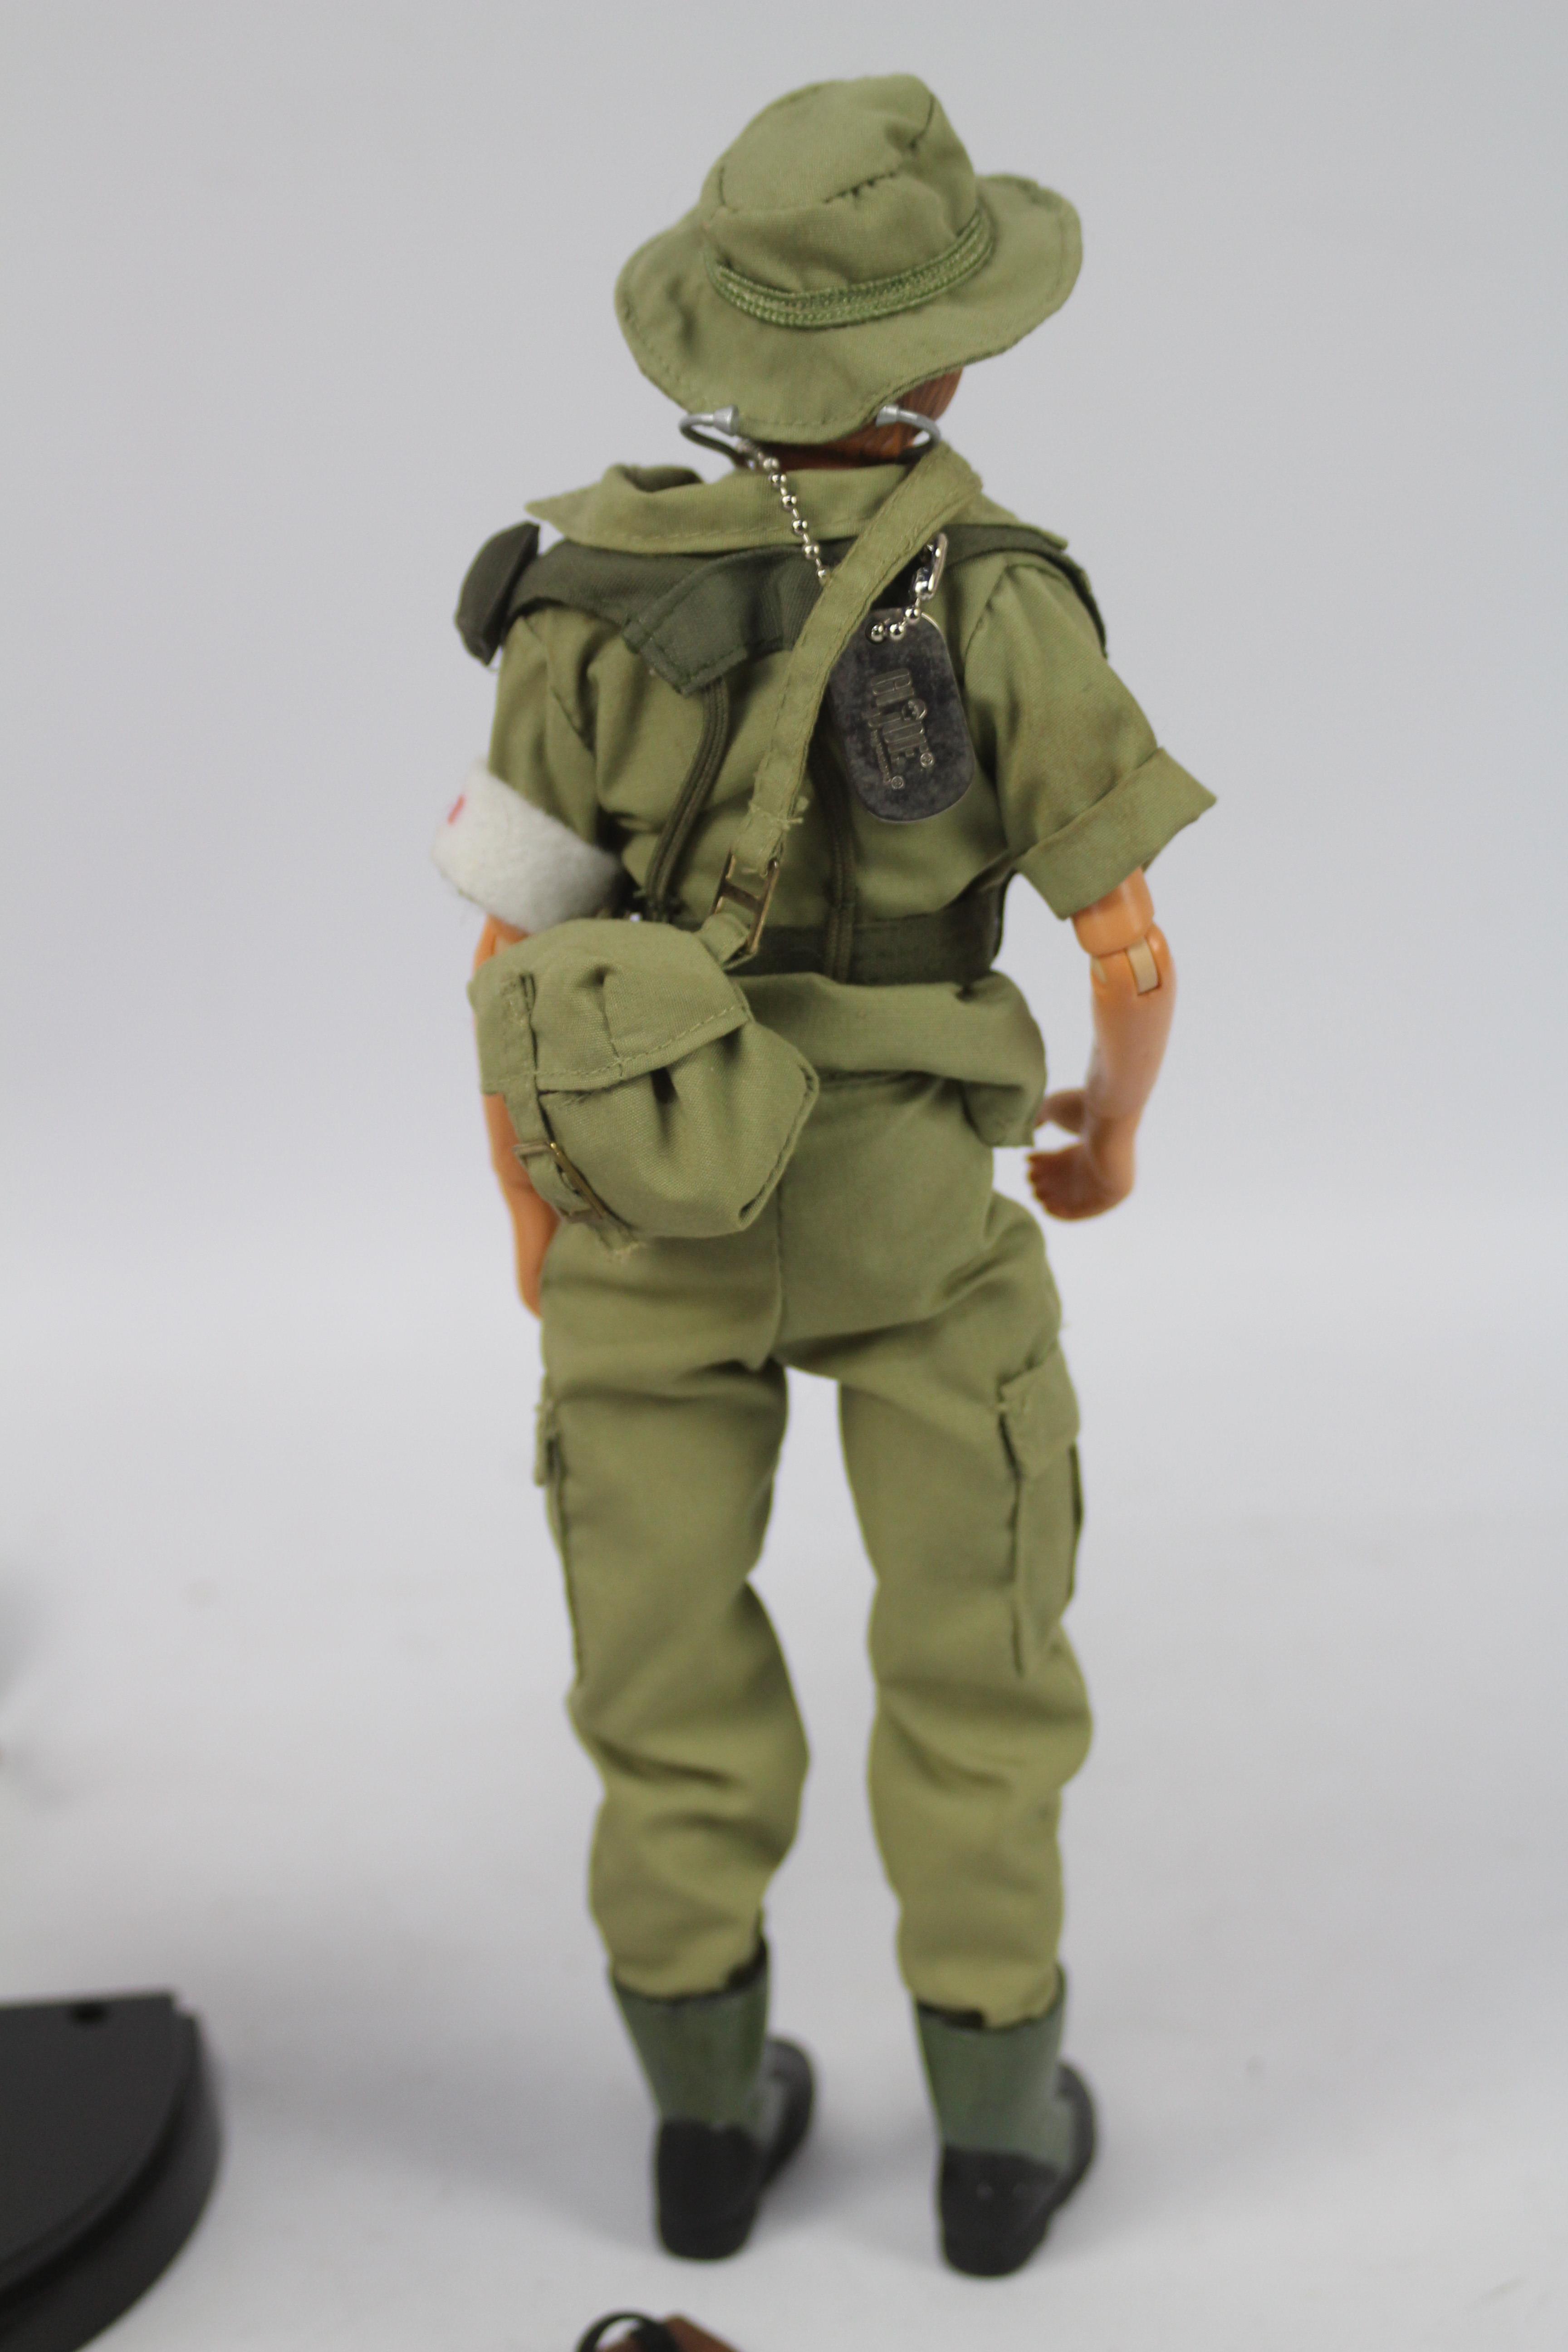 GI Joe, Hasbro, Dragon - Two unboxed 'Vietnam' themed action figures. - Image 5 of 5